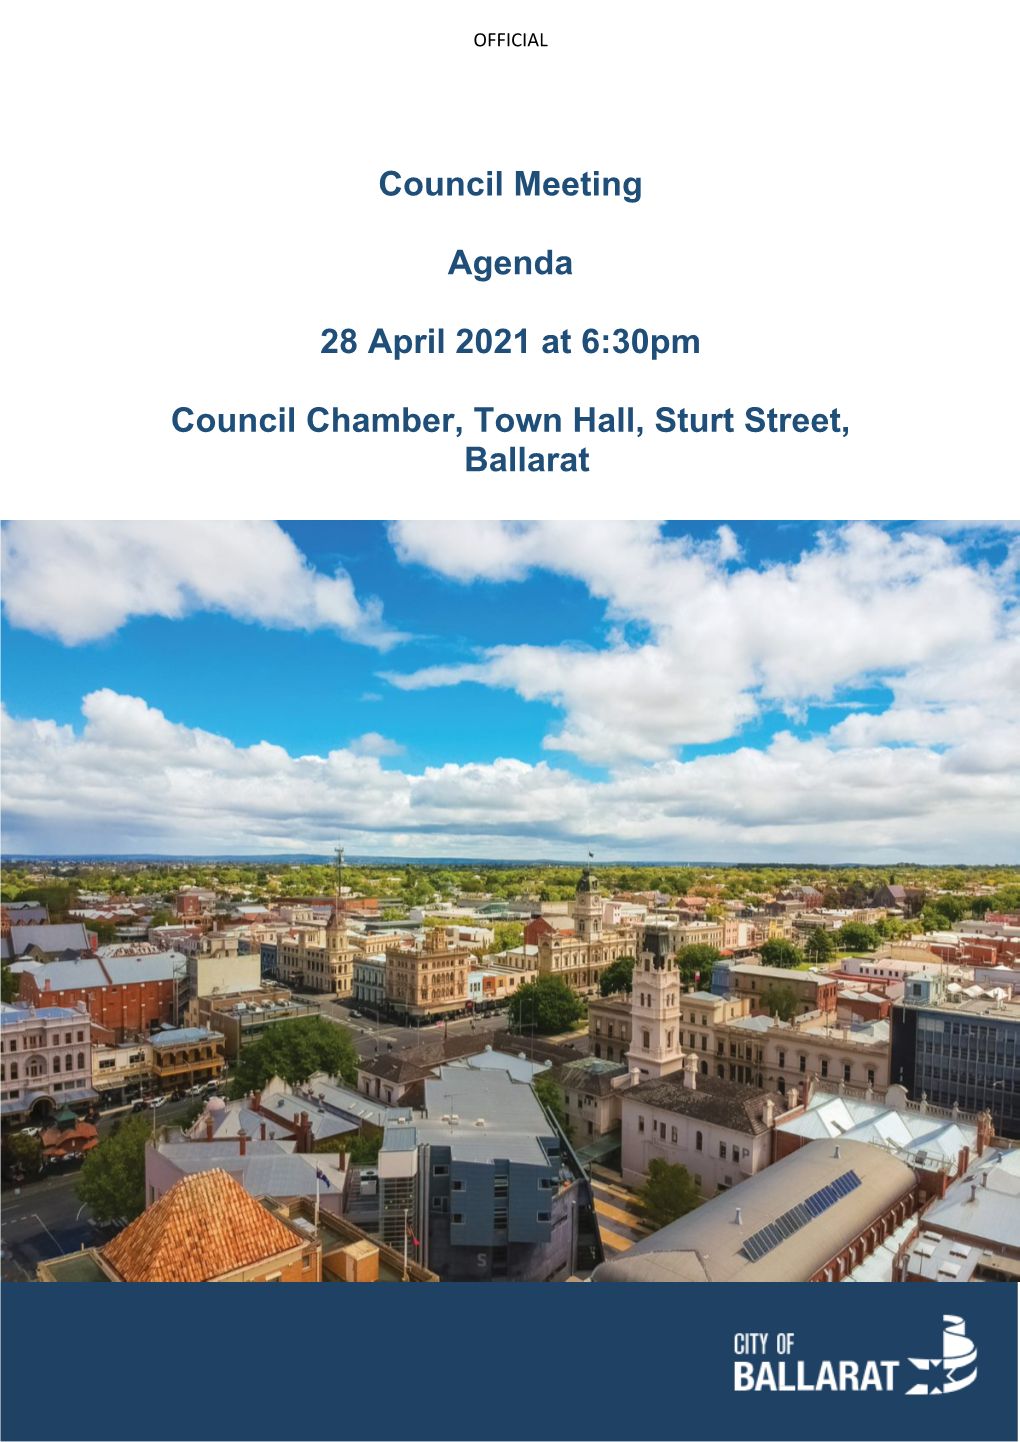 Council Meeting Agenda 28 April 2021 at 6:30Pm